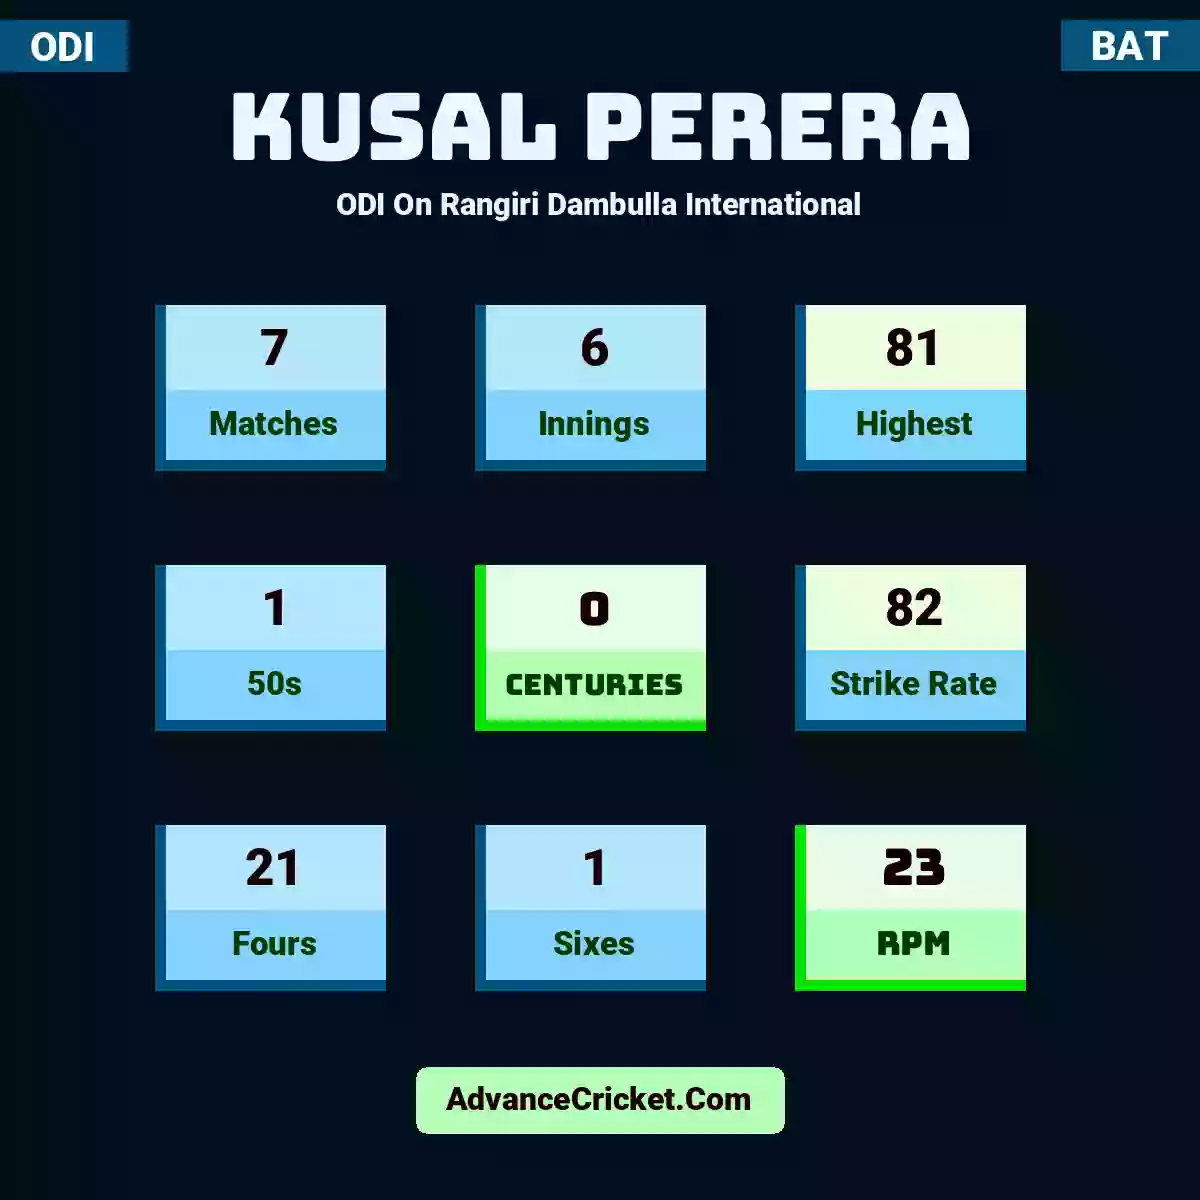 Kusal Perera ODI  On Rangiri Dambulla International, Kusal Perera played 7 matches, scored 81 runs as highest, 1 half-centuries, and 0 centuries, with a strike rate of 82. K.Perera hit 21 fours and 1 sixes, with an RPM of 23.